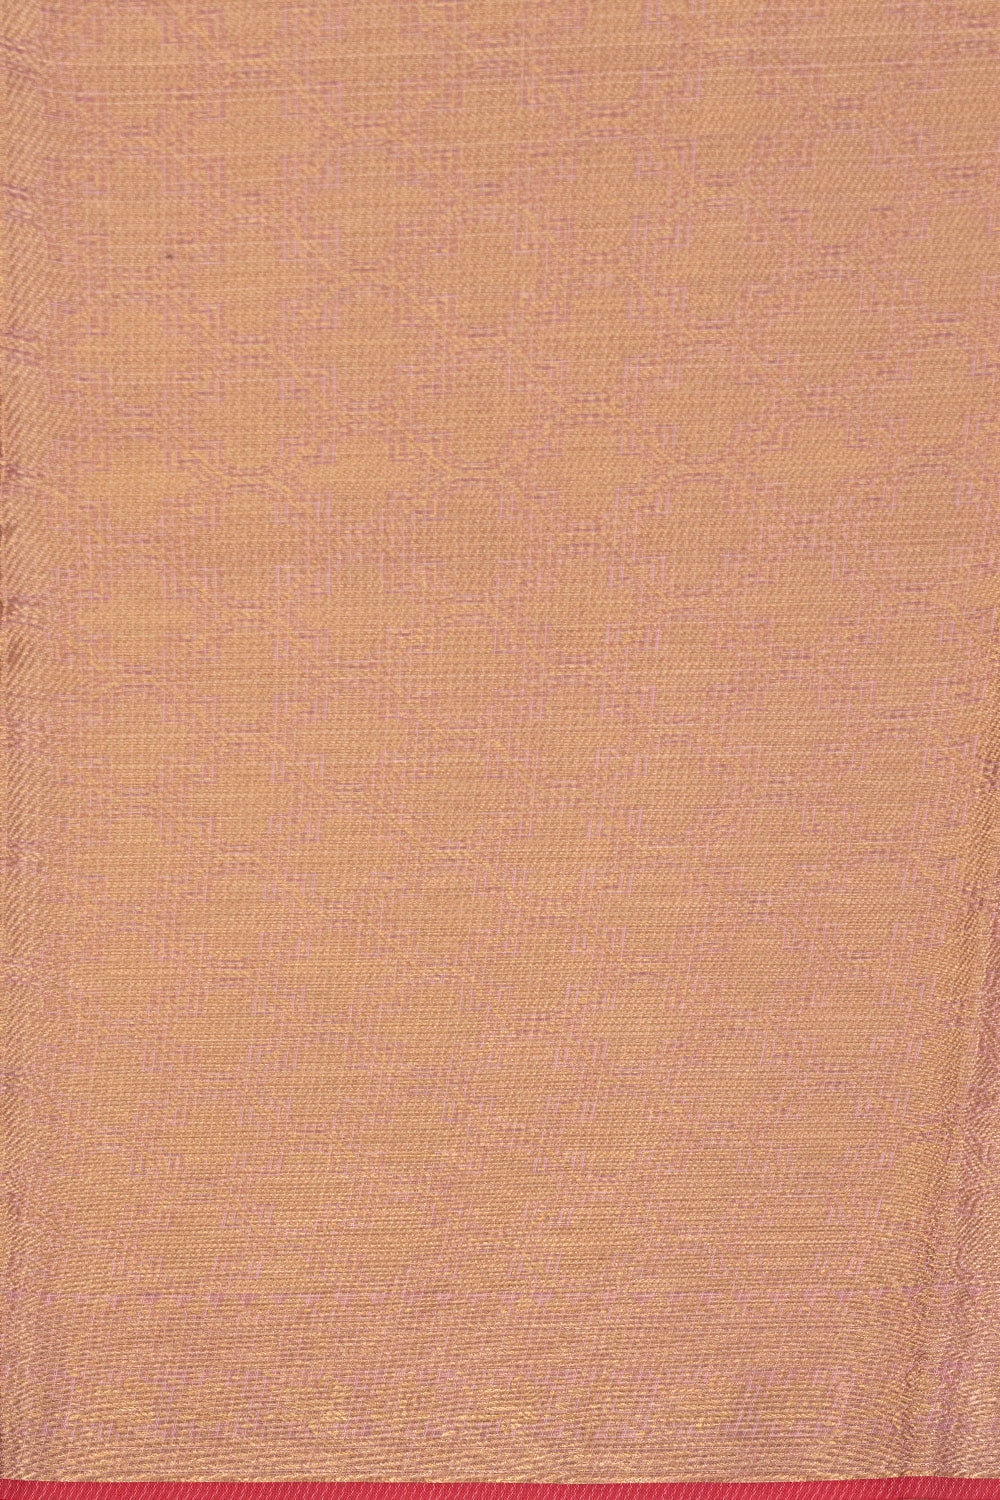 Lavender Handloom Banarasi Silk Cotton Saree 10070504 - Avishya